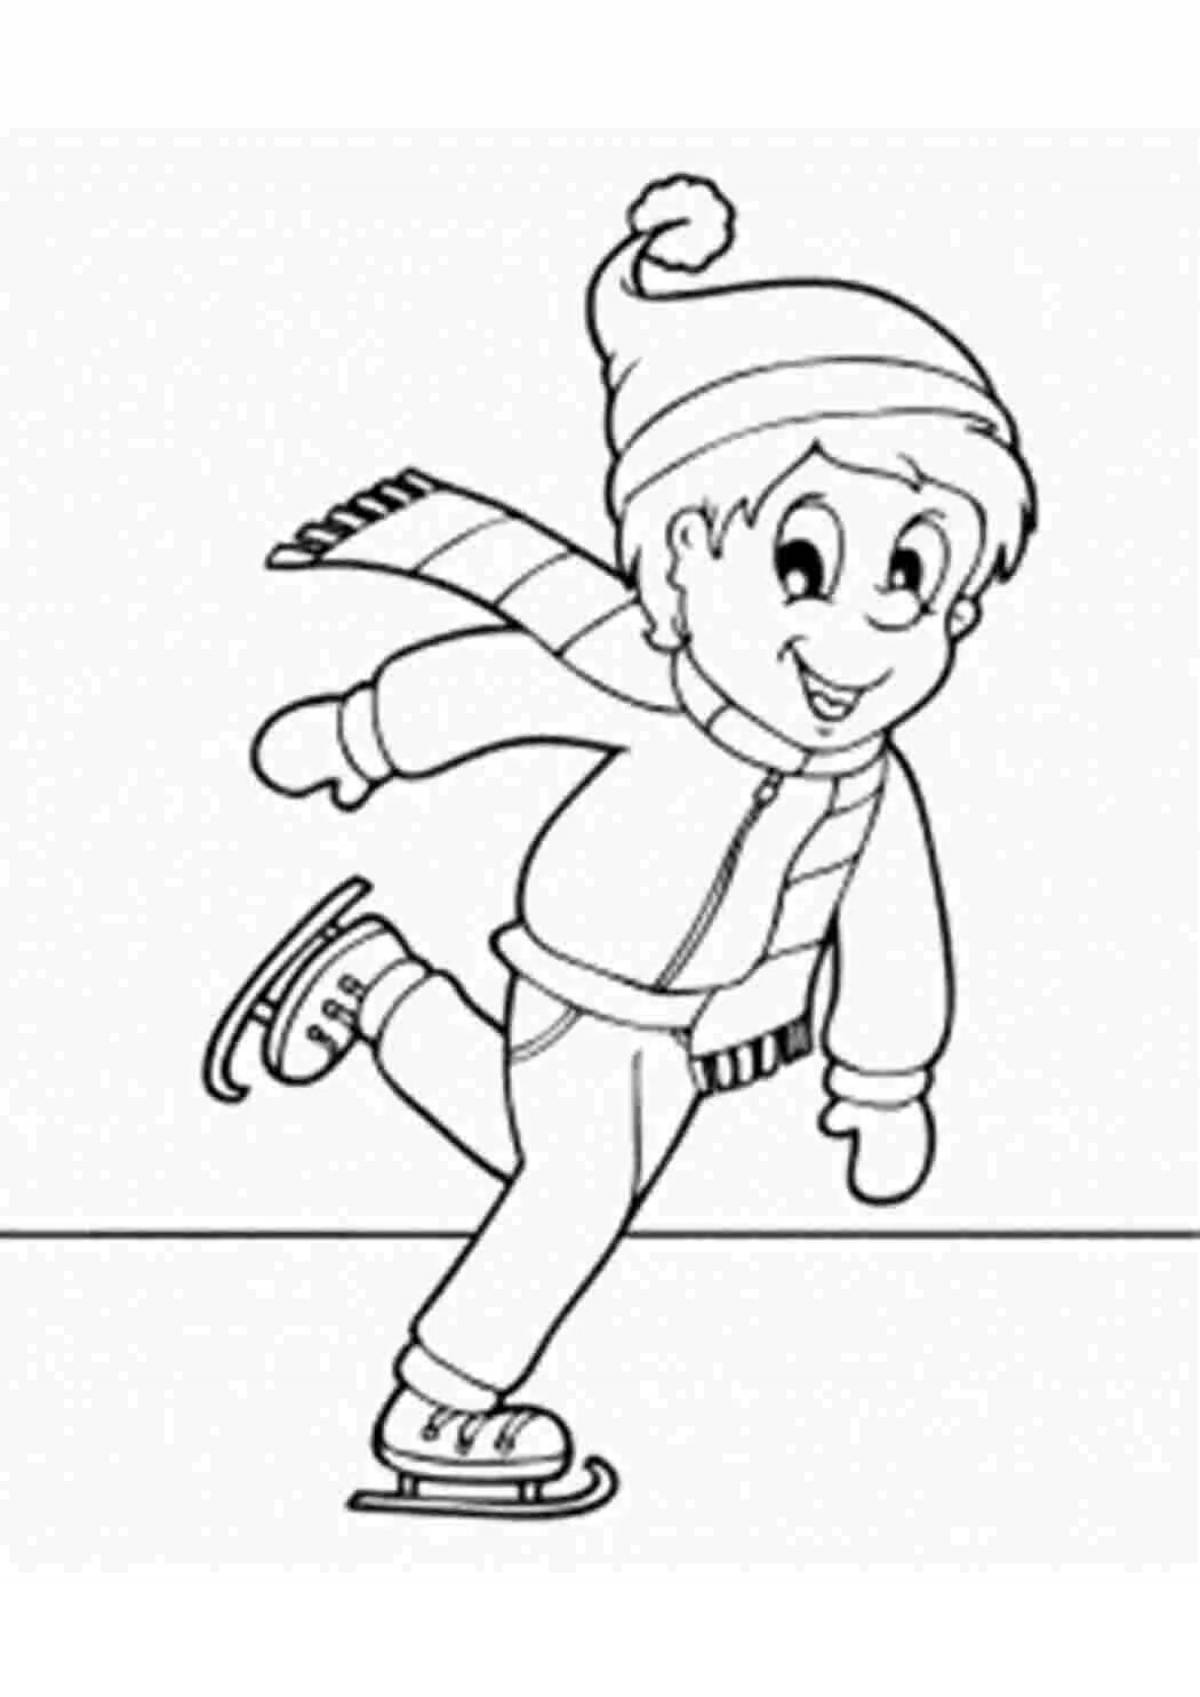 Well-balanced boy skating for children